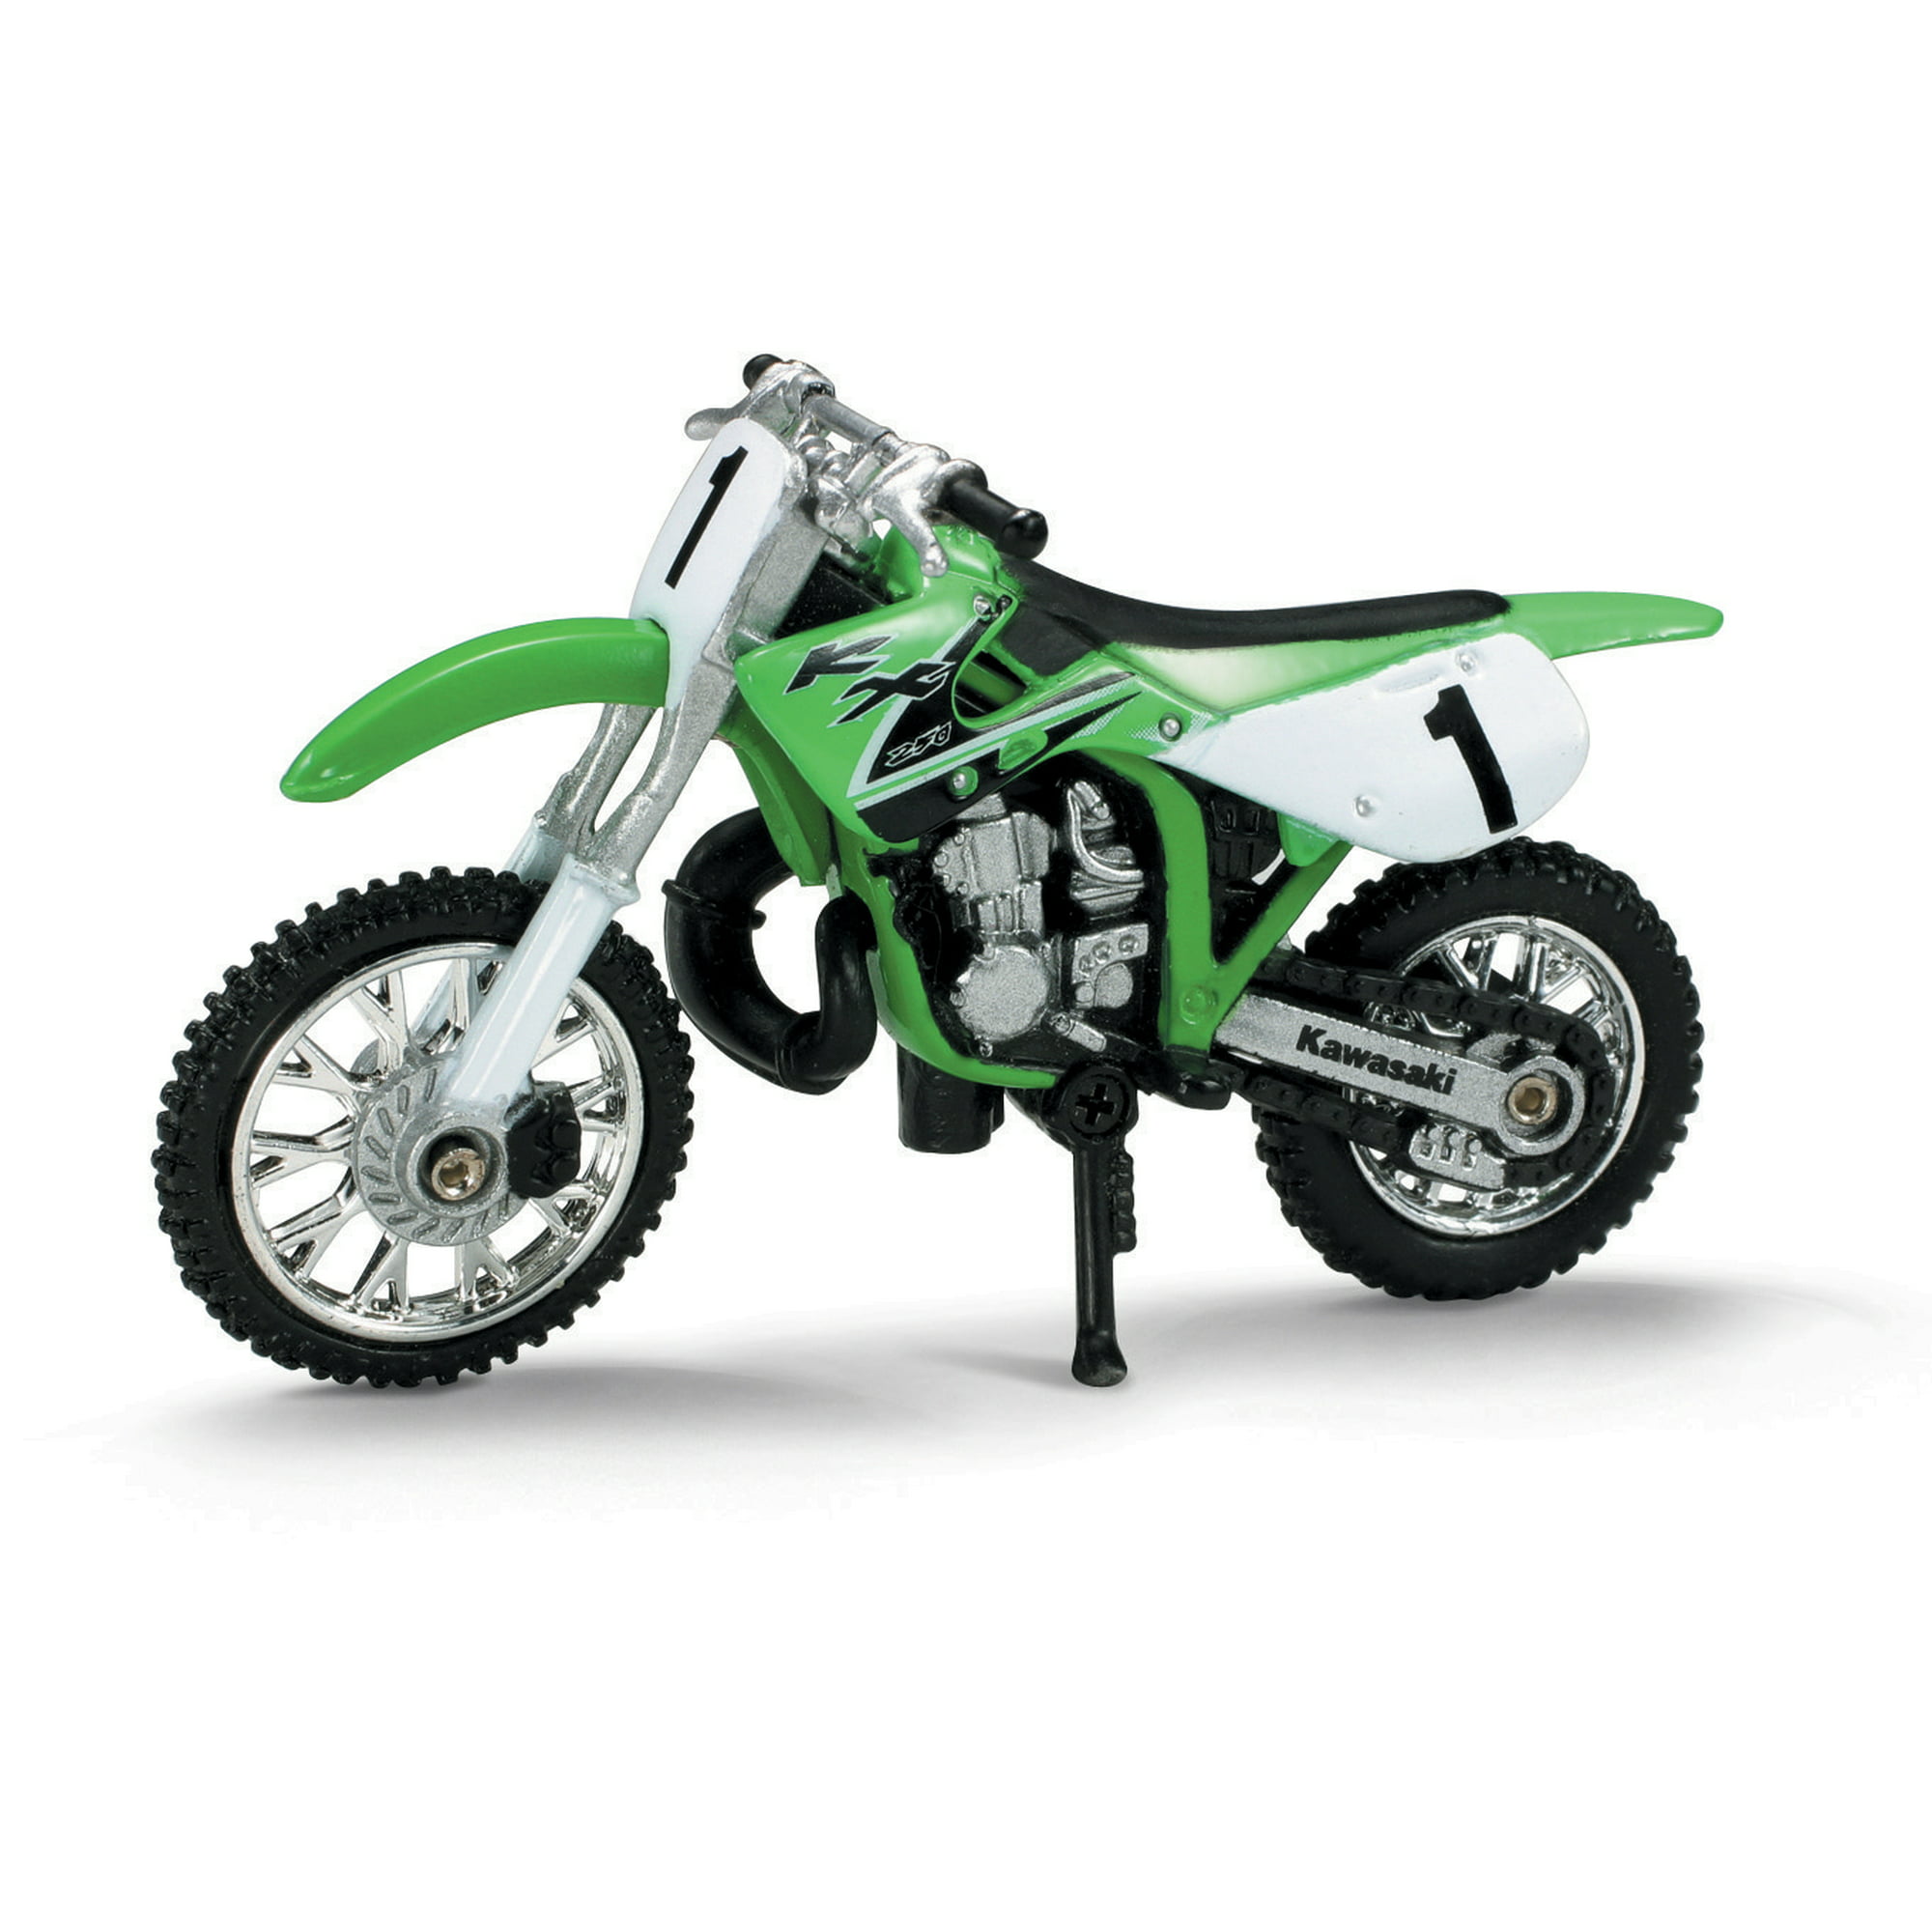 vej maksimere sagtmodighed Die-Cast Green Kawasaki KK 250 Dirt Bike, 1:32 Scale | Walmart Canada